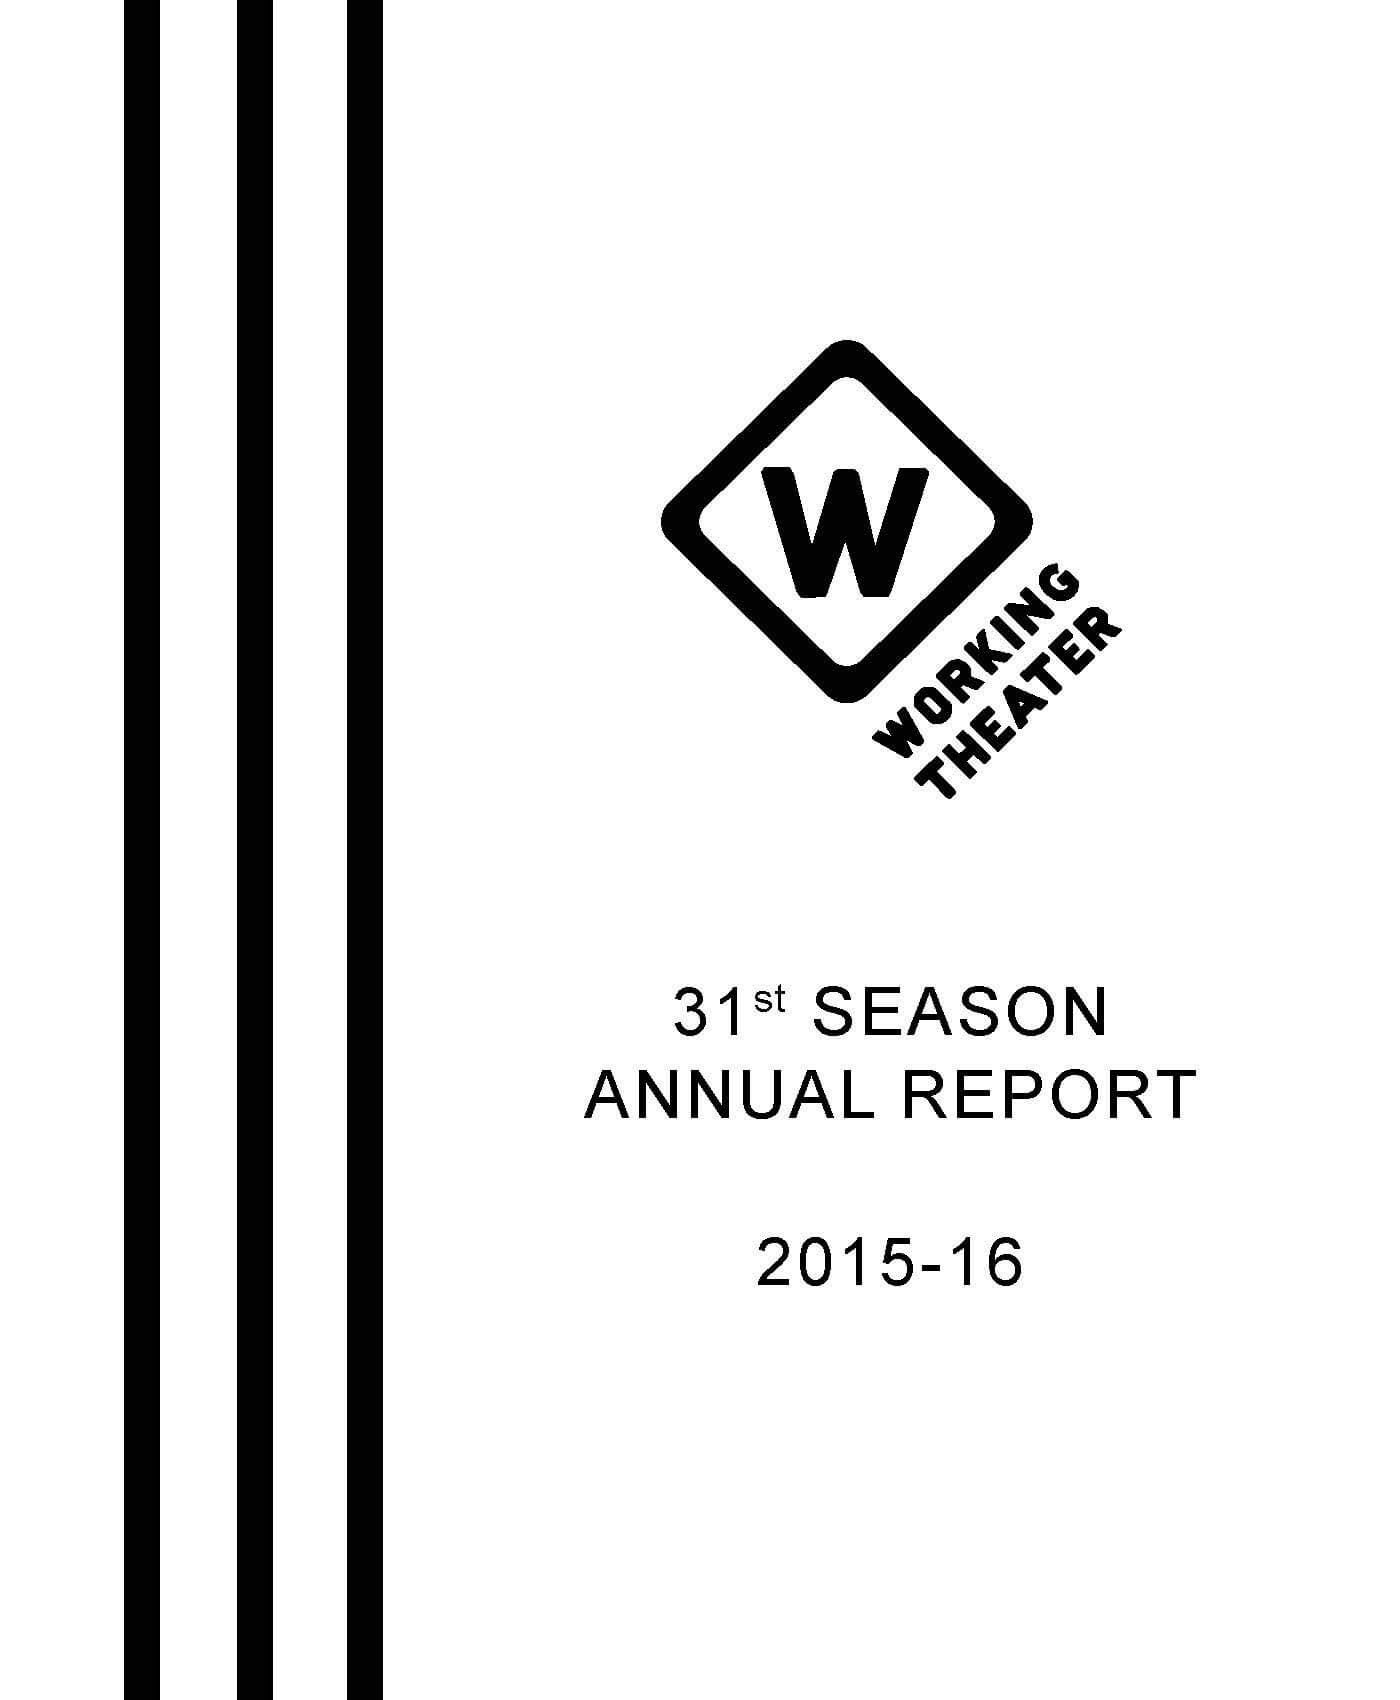 31st season annual report